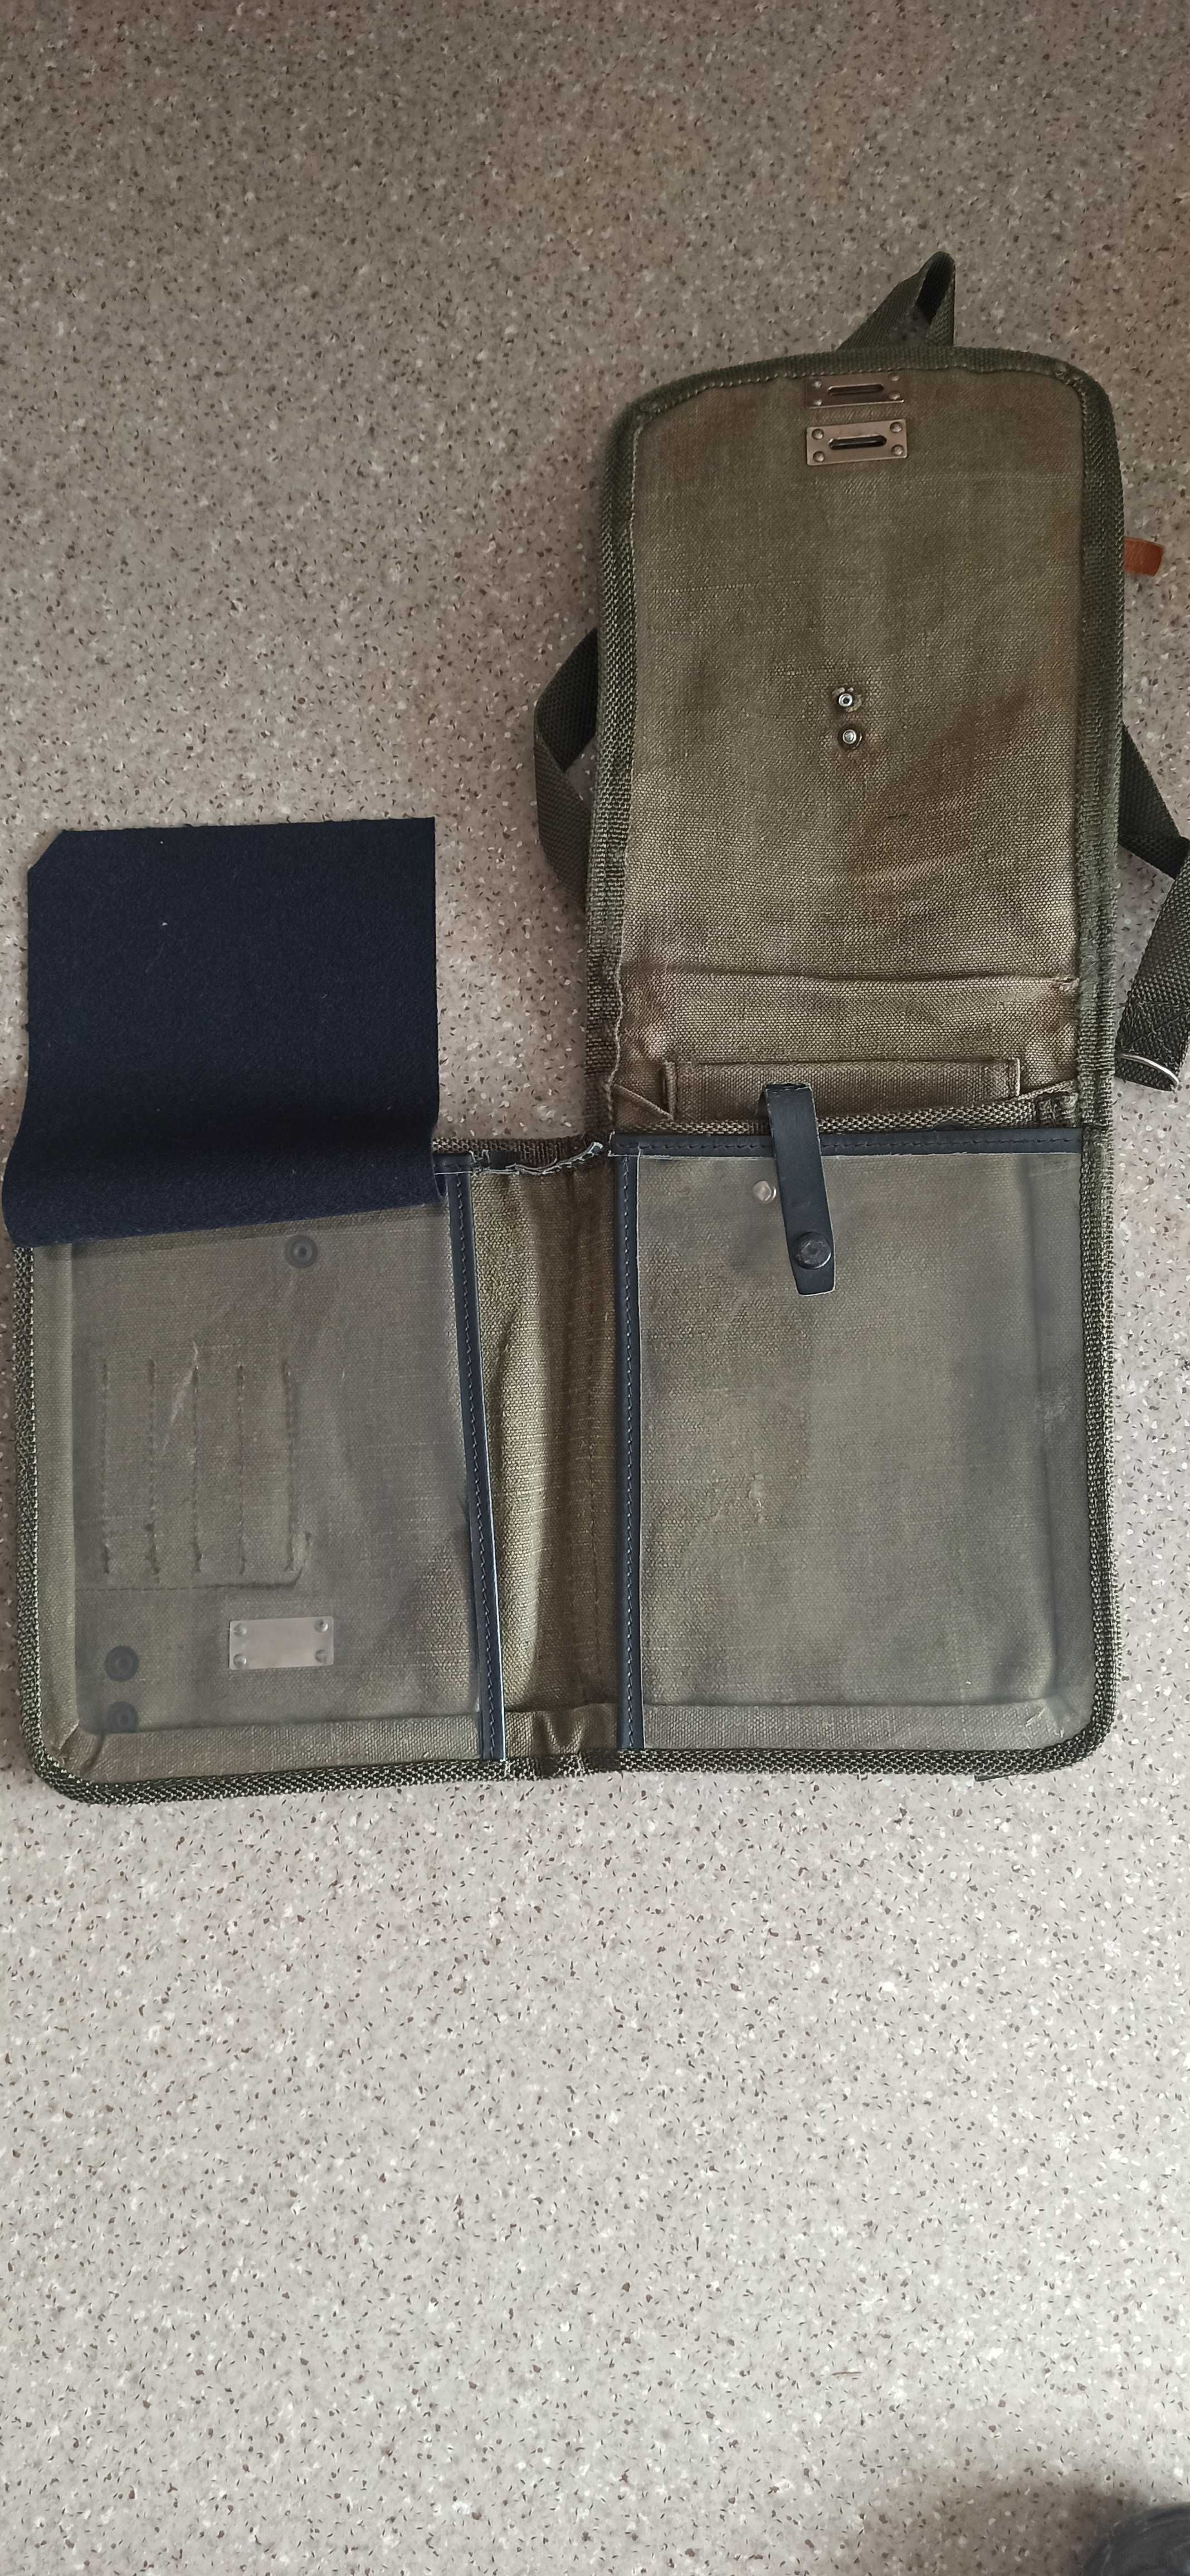 Mapnik, torba wojskowa  985/MON